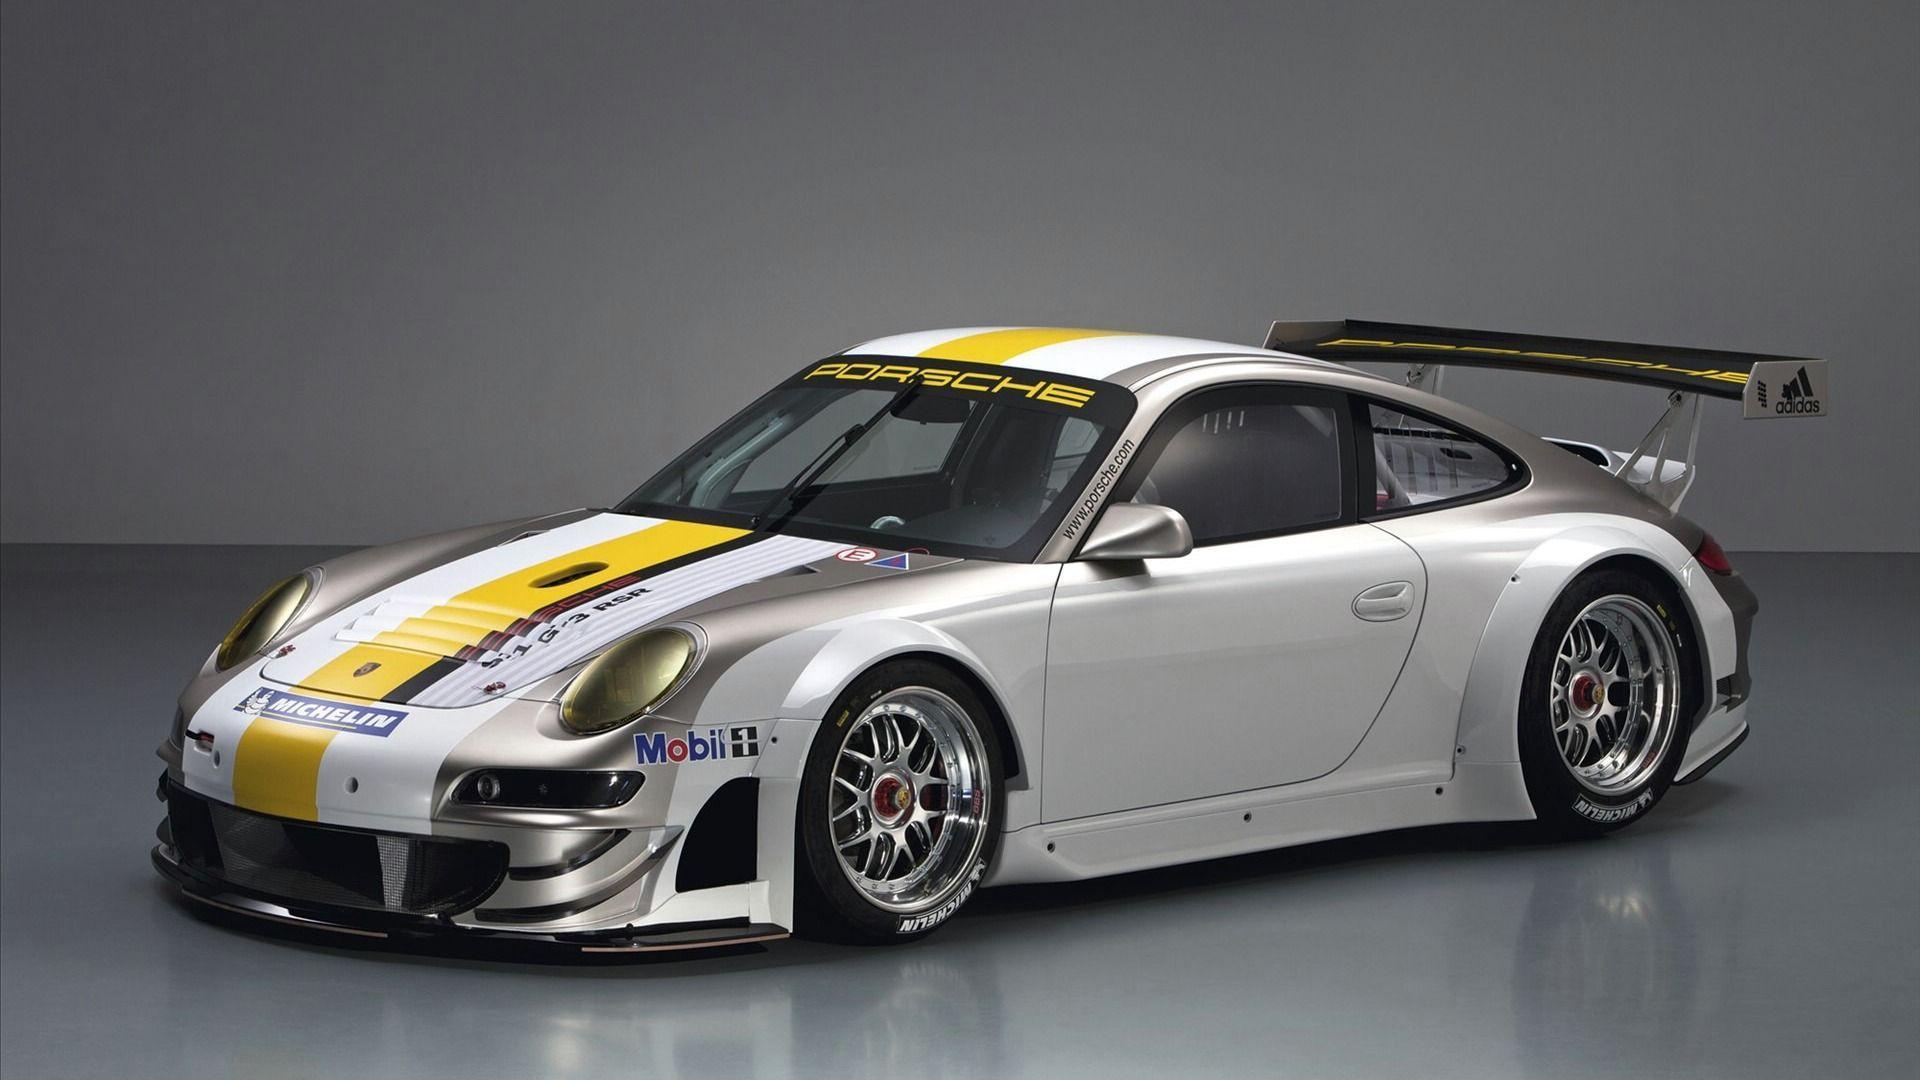 image For > Porsche 911 Gt3 Rs 4.0 Wallpaper